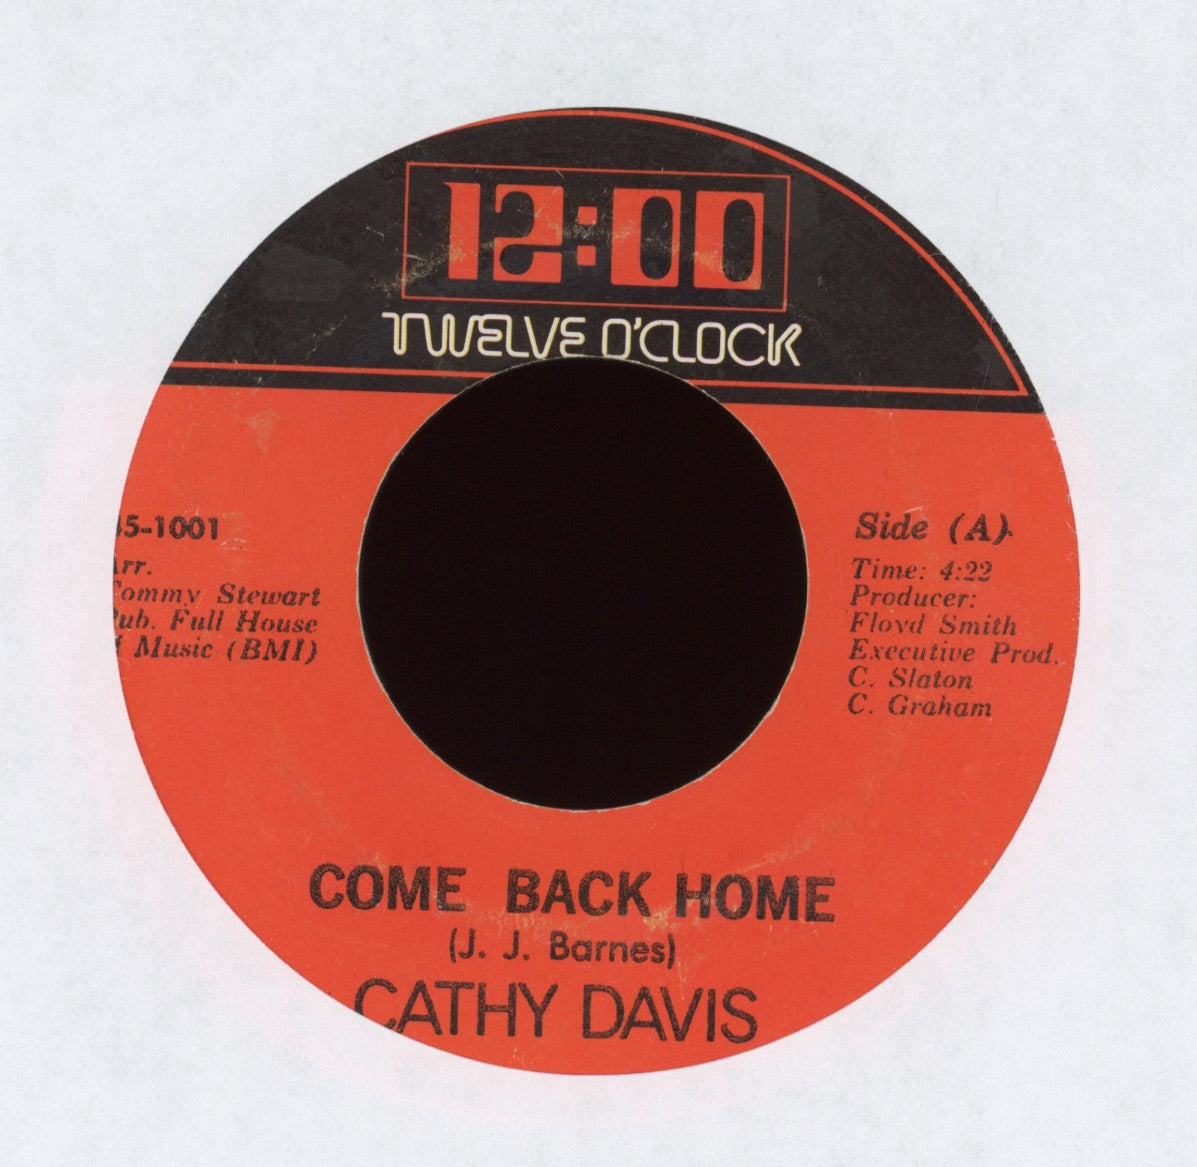 Cathy Davis - Come Back Home on Twelve O'Clock 70's Soul Funk 45